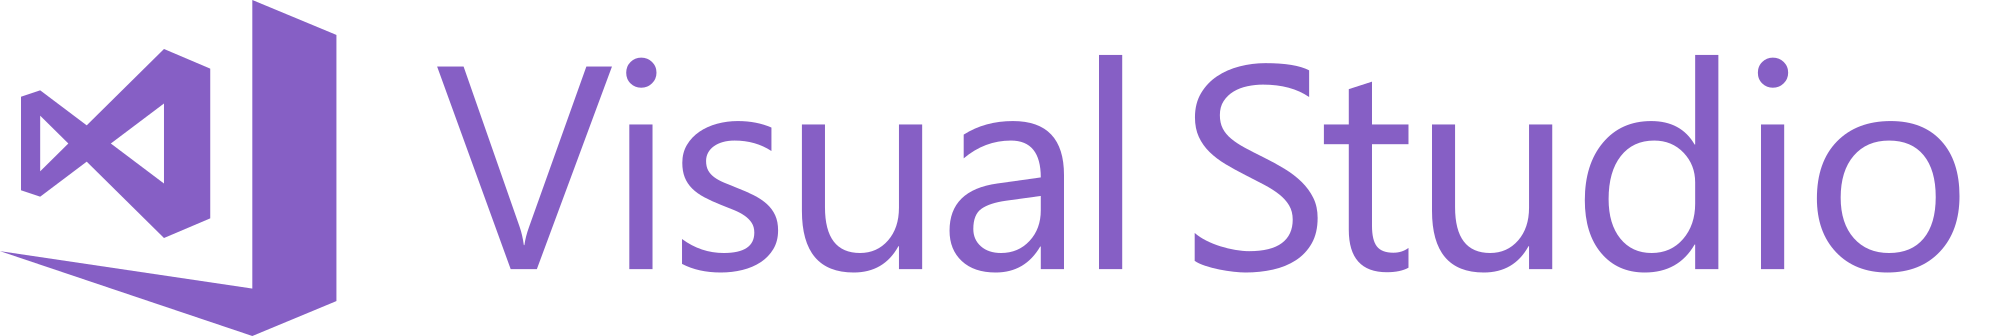 Visual Web Developer Logo - File:Visual Studio 2017 logo and wordmark.svg - Wikimedia Commons